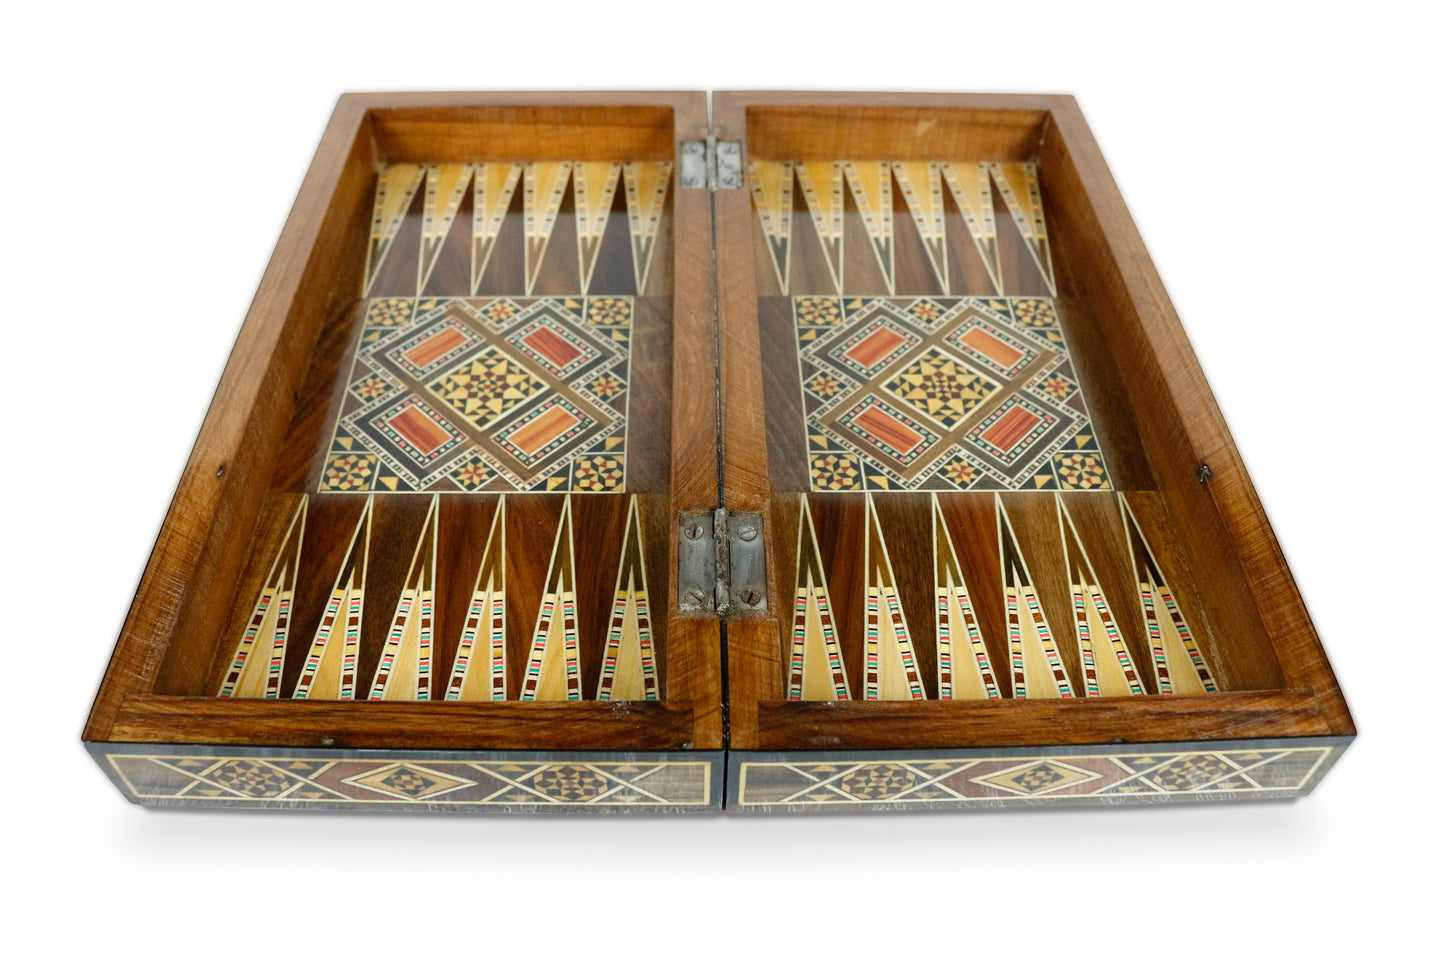 Holz Backgammon/Schach Brett inkl.Holz Steine,Figuren BK301AF